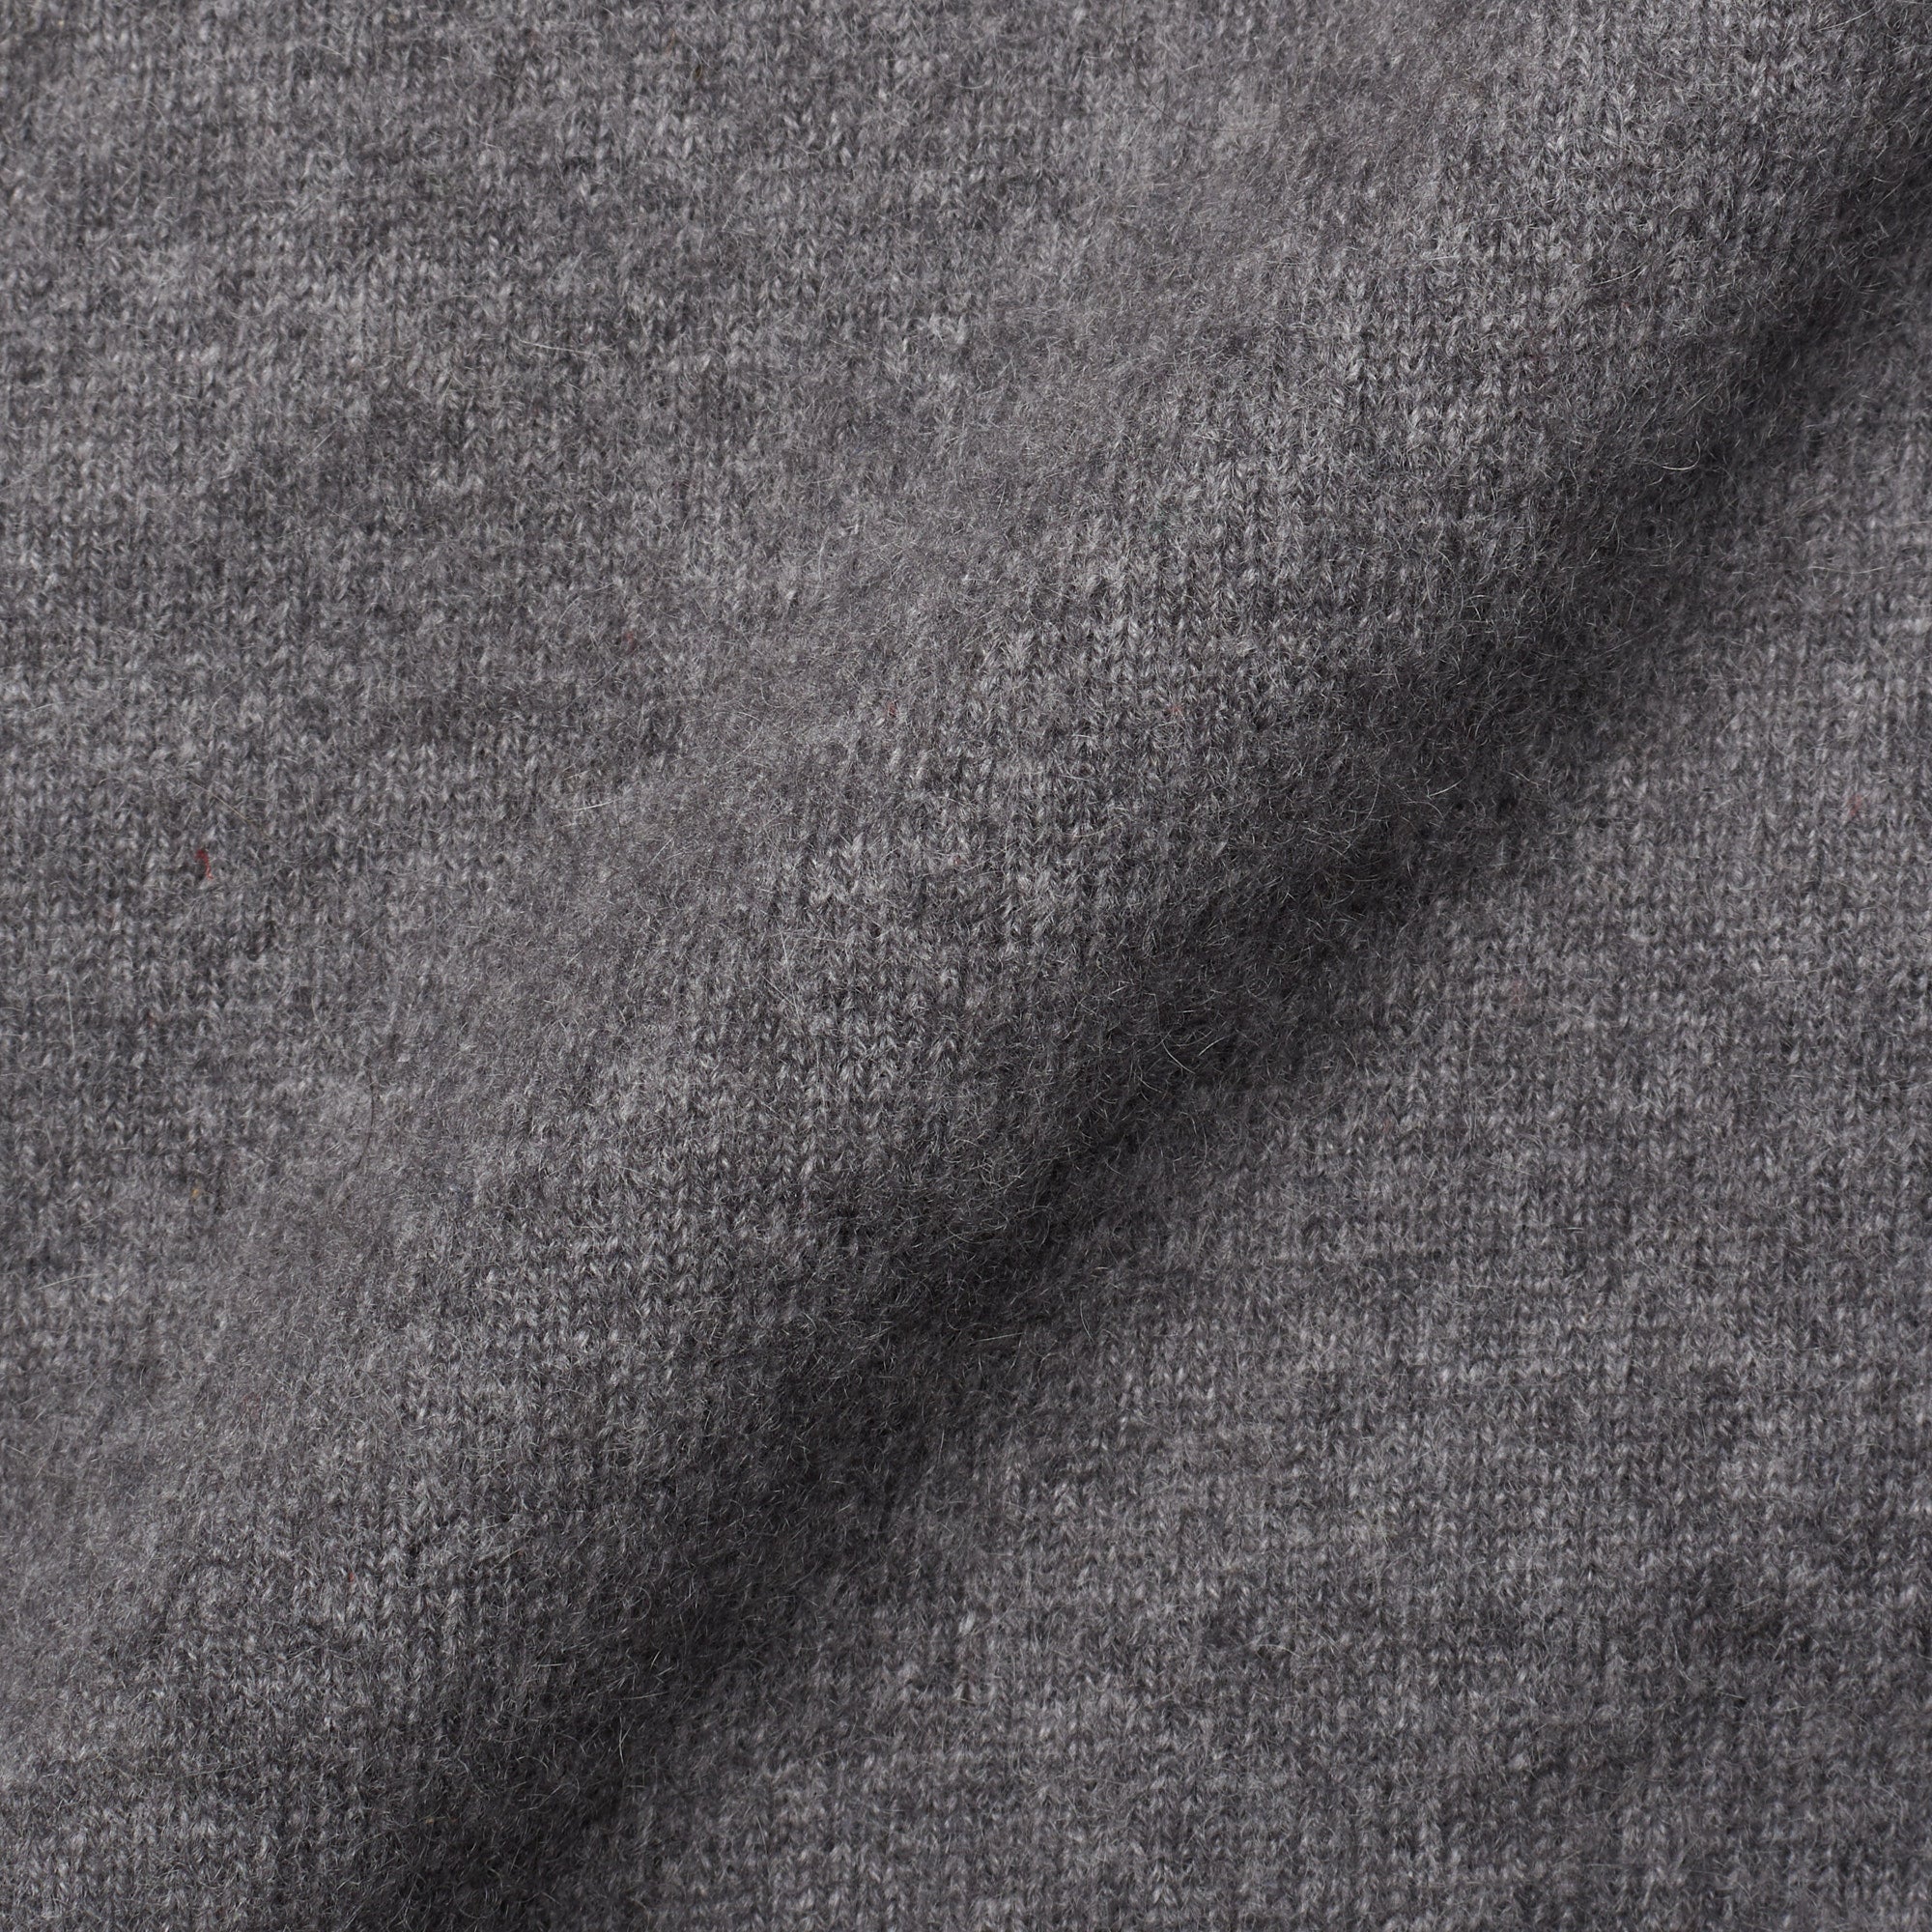 CRUCIANI Gray Cashmere Knit 2-Way Zip Cardigan Sweater EU 50 US M CRUCIANI